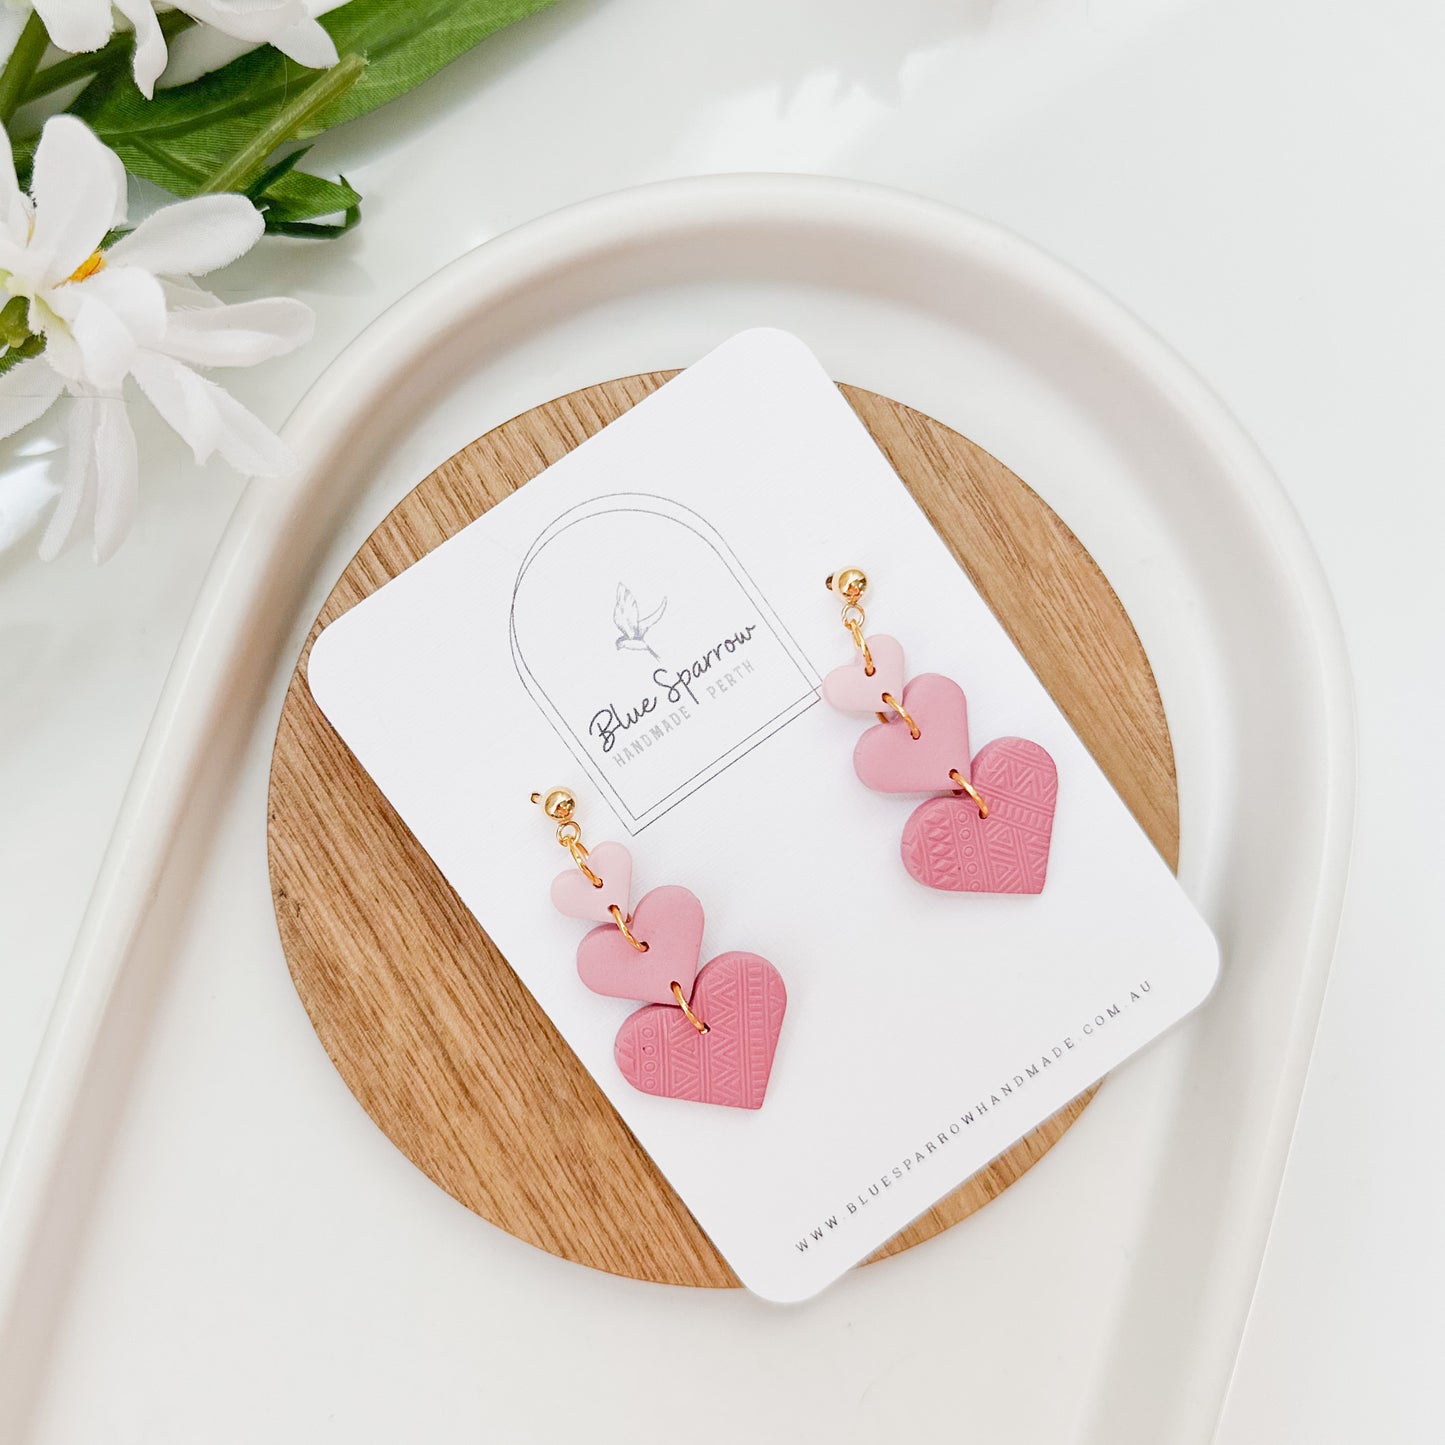 Pink Hearts Trio Earrings